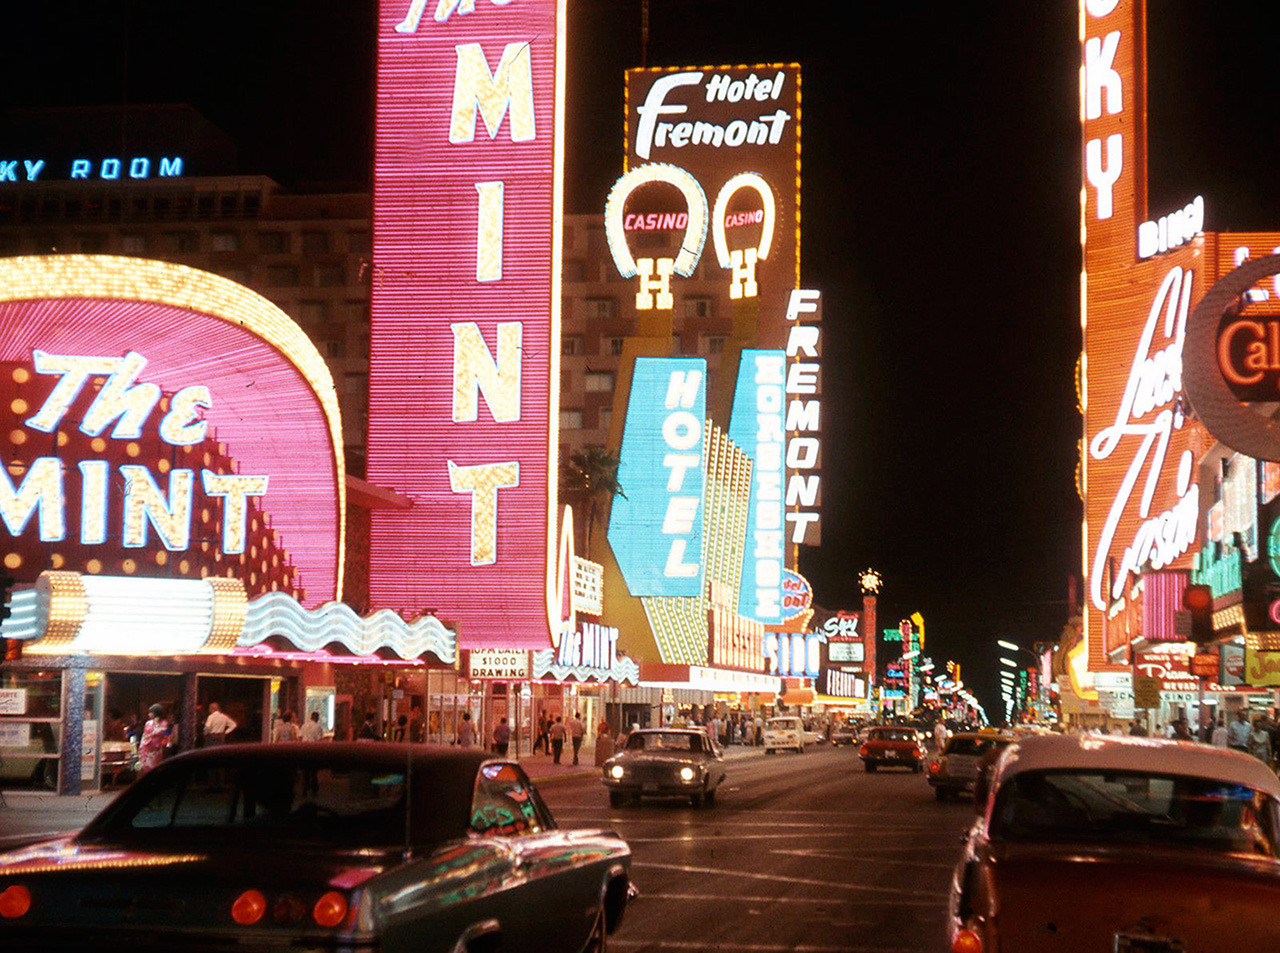 The Mint Hotel Casino Center Downtn Las Vegas BLACK Advertising Comb VINTAGE NOS 